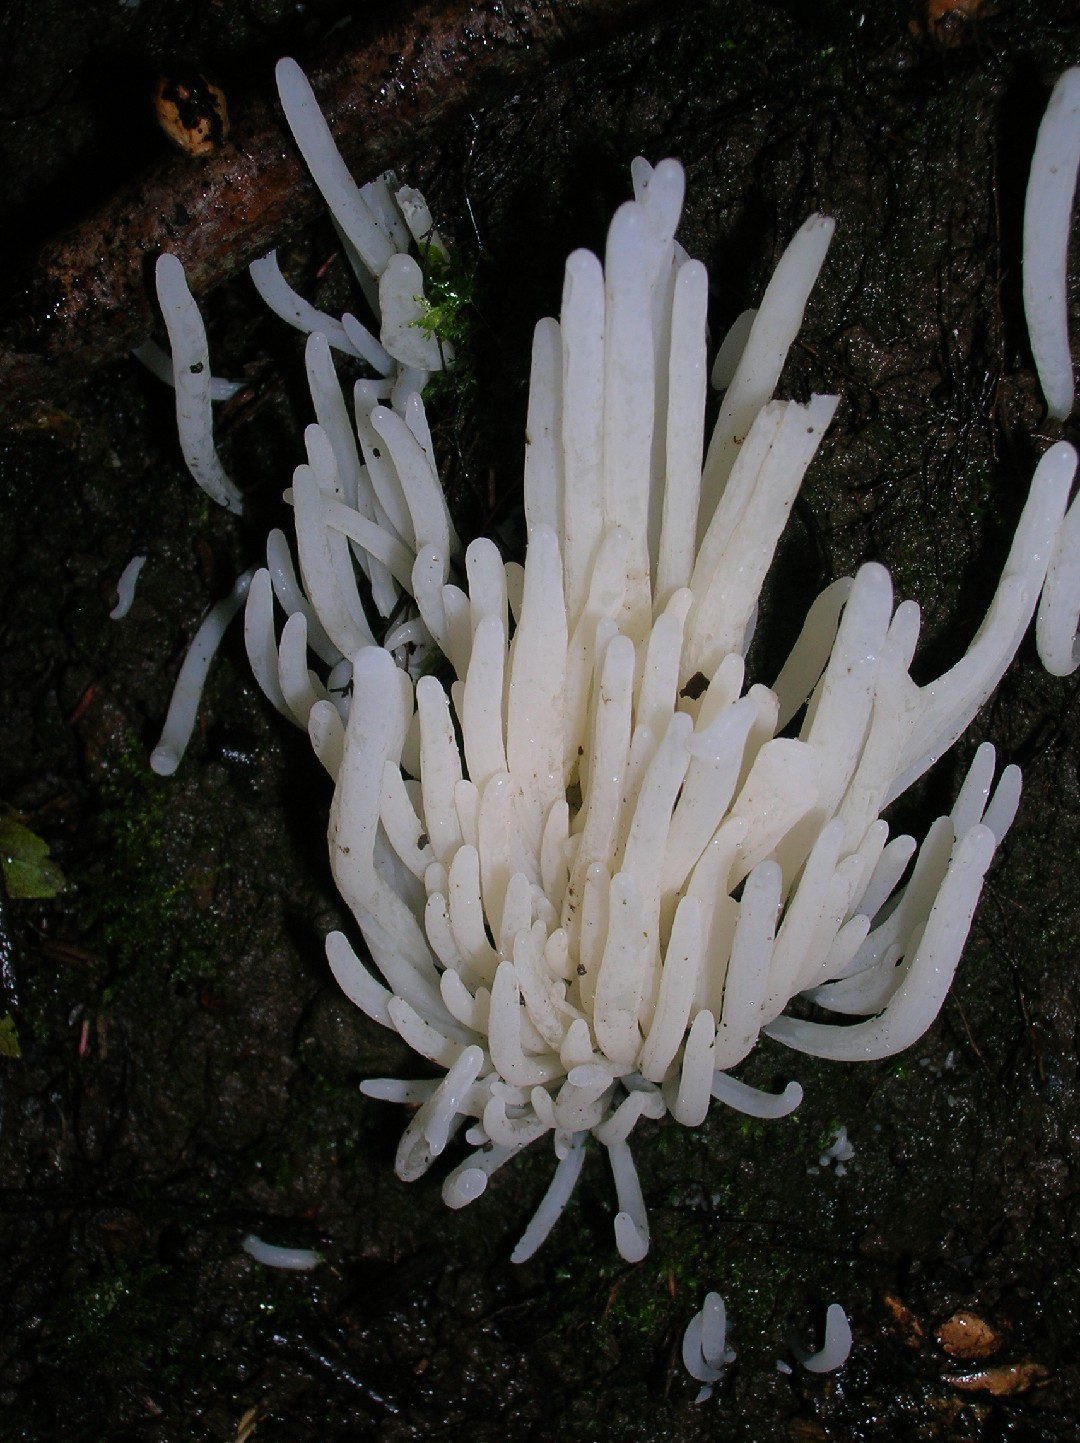 White spindles (Clavaria fragilis)